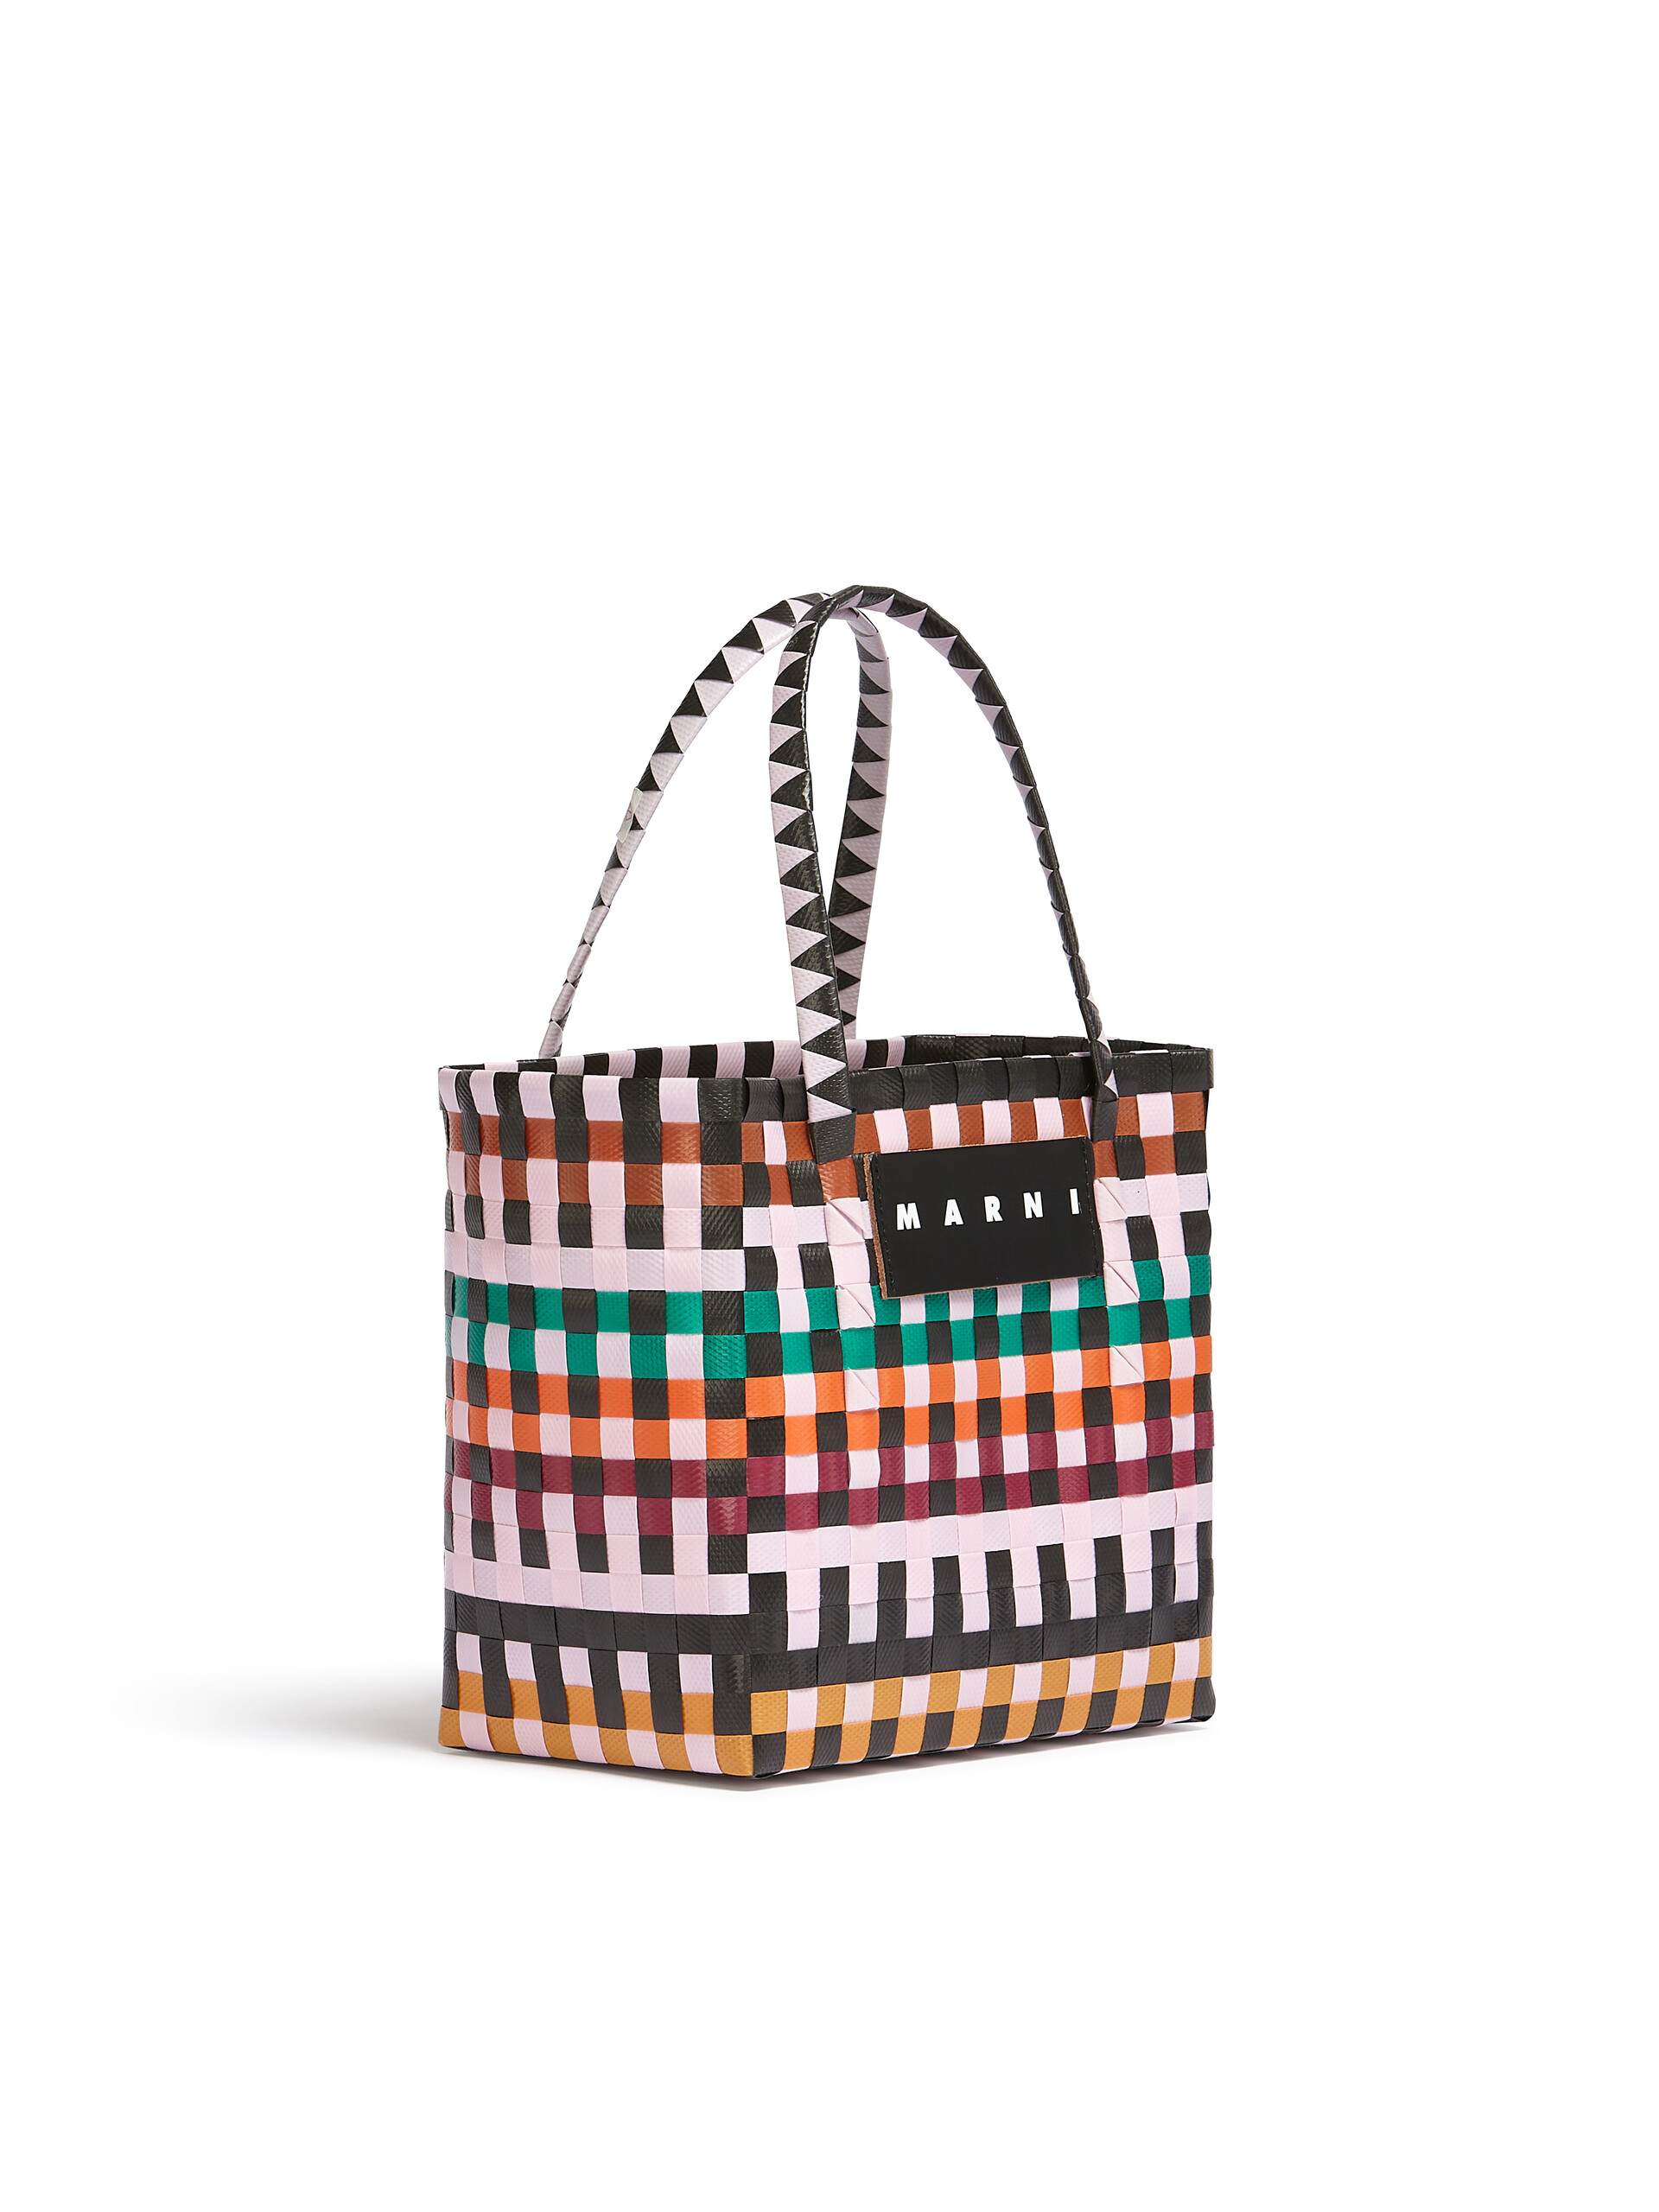 MARNI MARKET MINI BASKET bag in multicolor woven material - Shopping Bags - Image 2